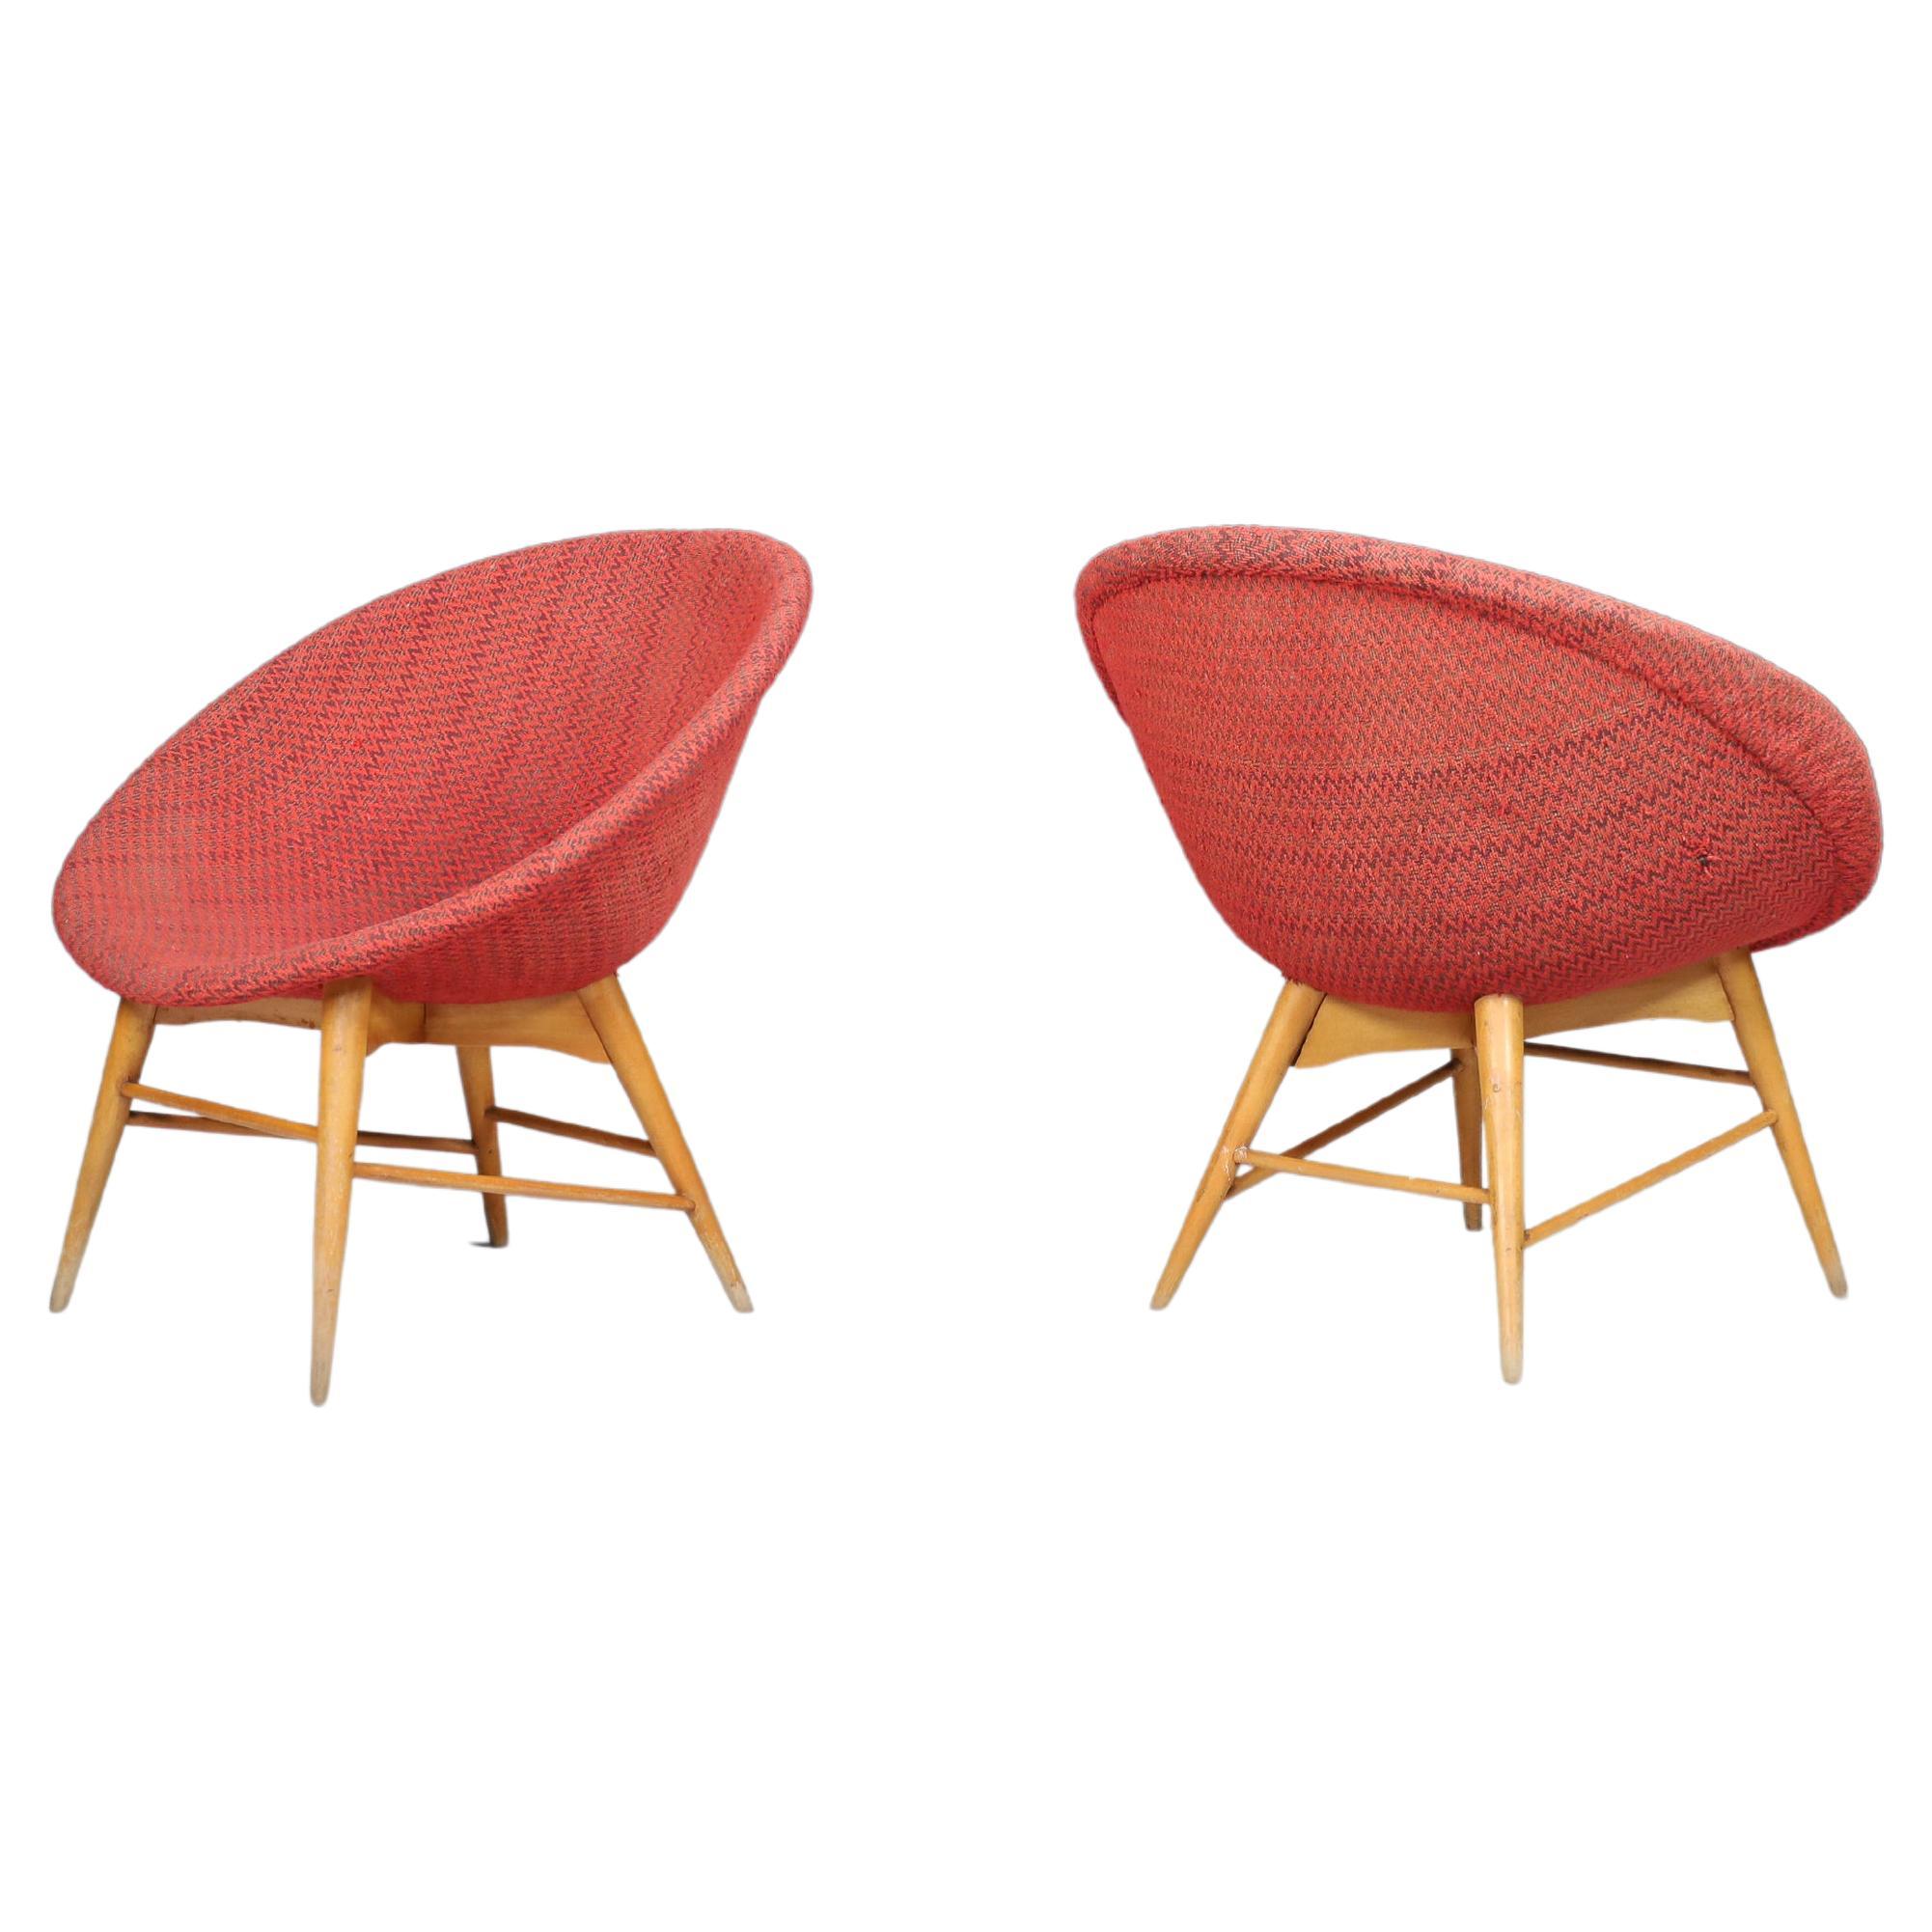 Miroslav Navratil Basket Chairs in Original Red Fabric, 1960